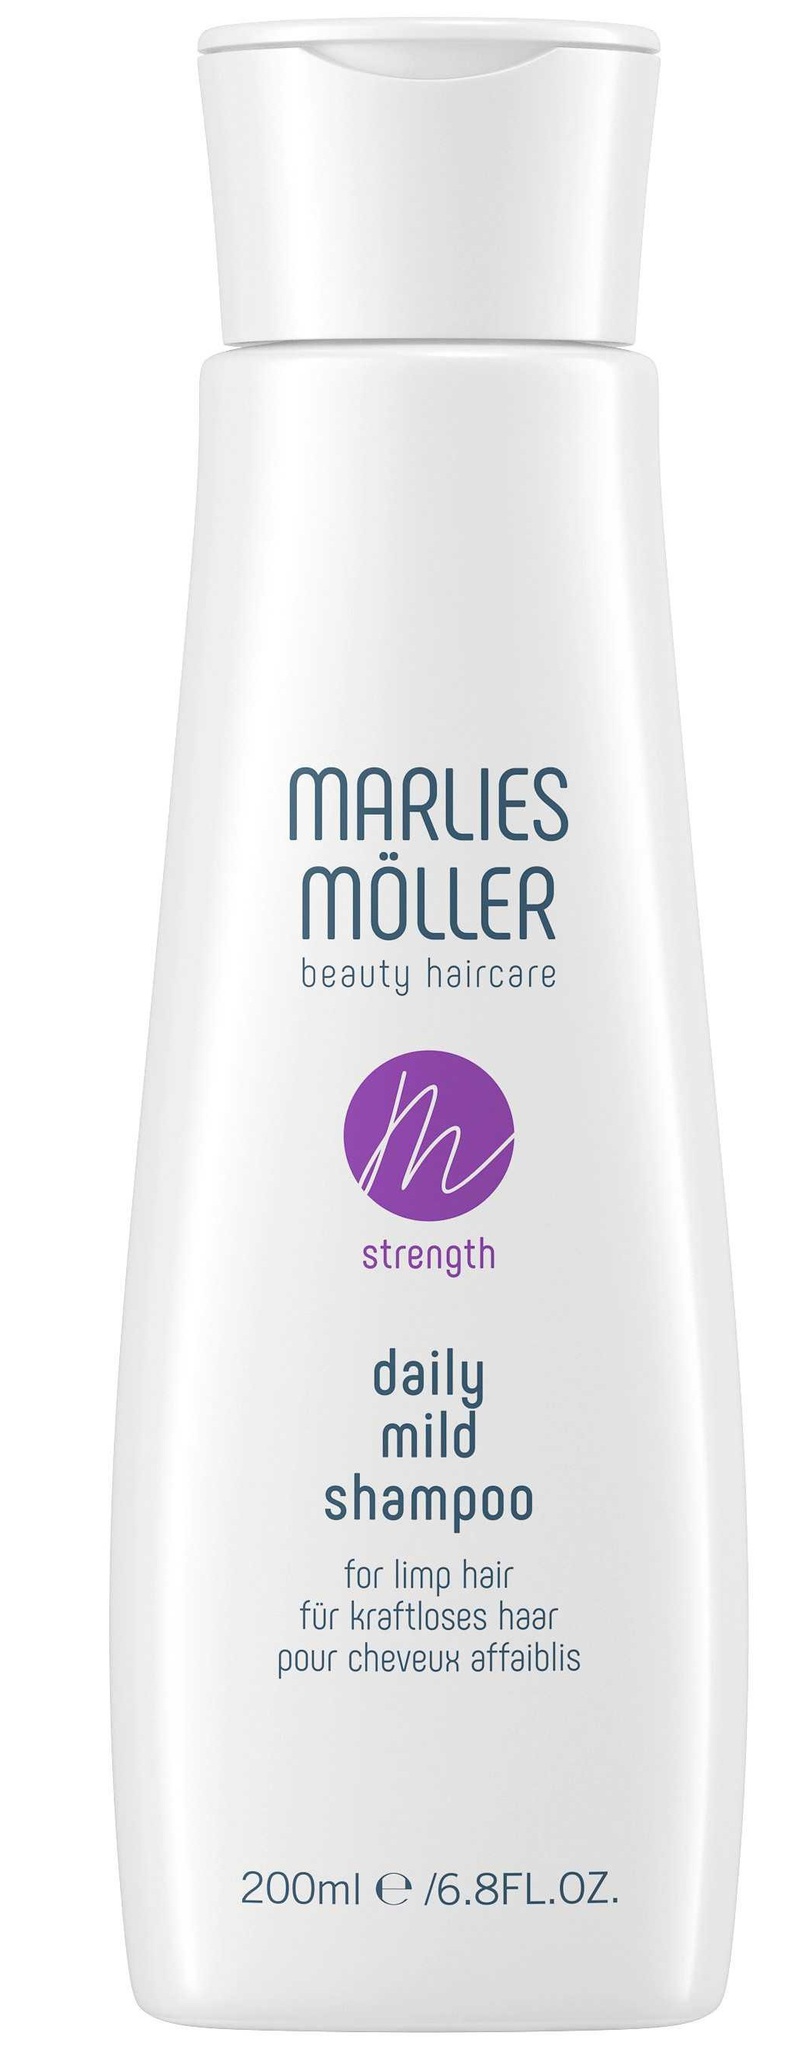 Marlies Möller Daily Mild Shampoo